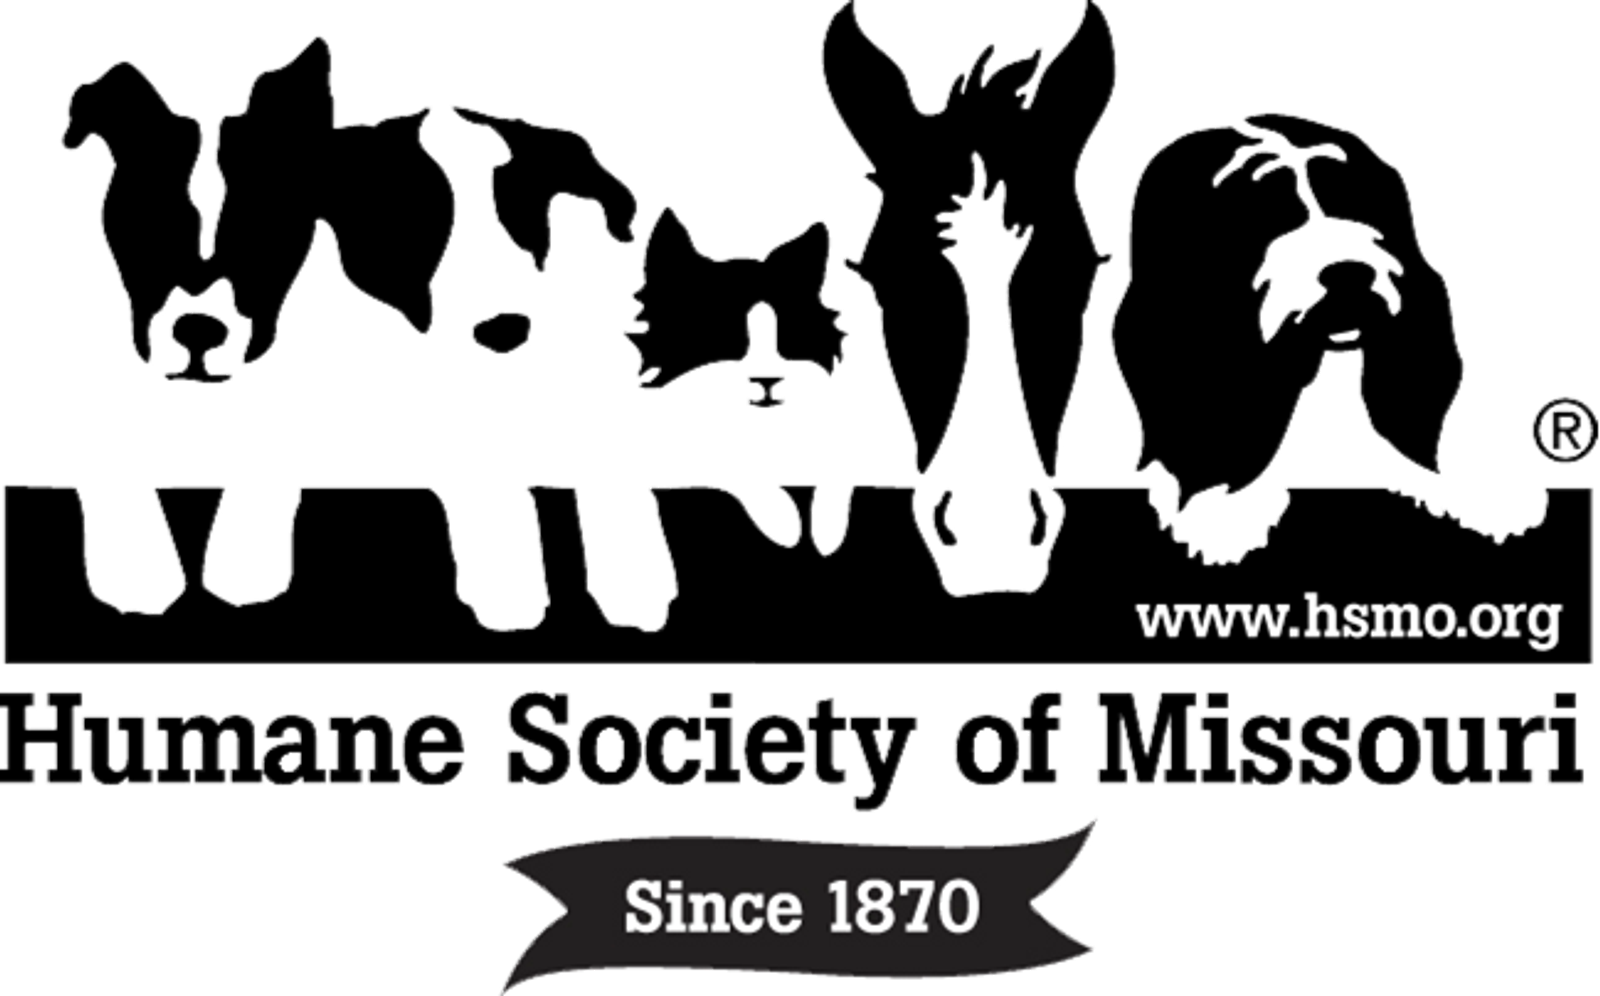 Humane Society of Missouri